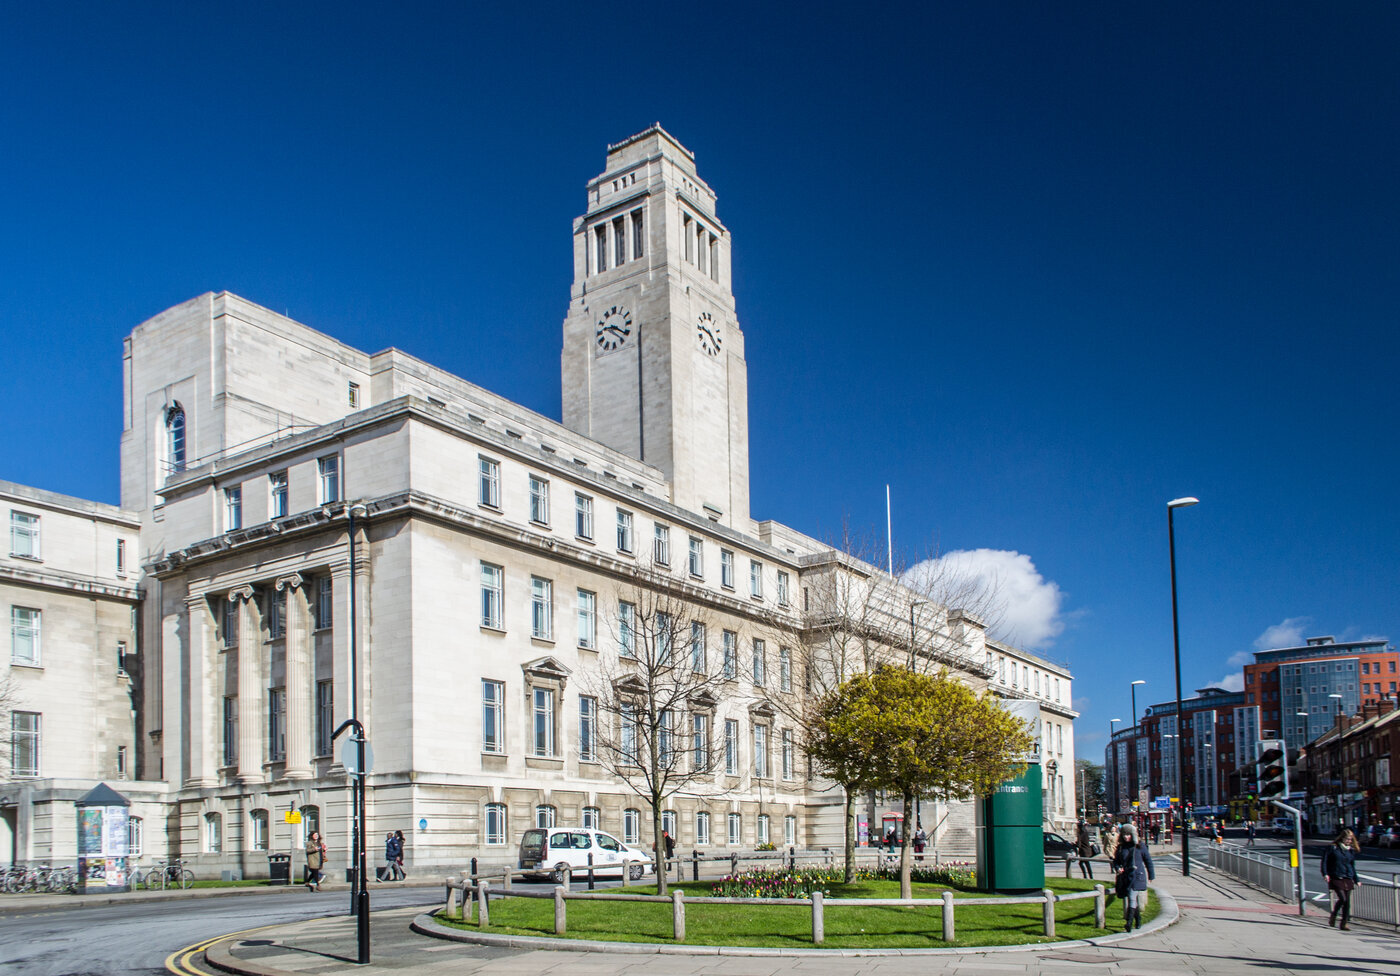 Parkinson Building at the University of Leeds